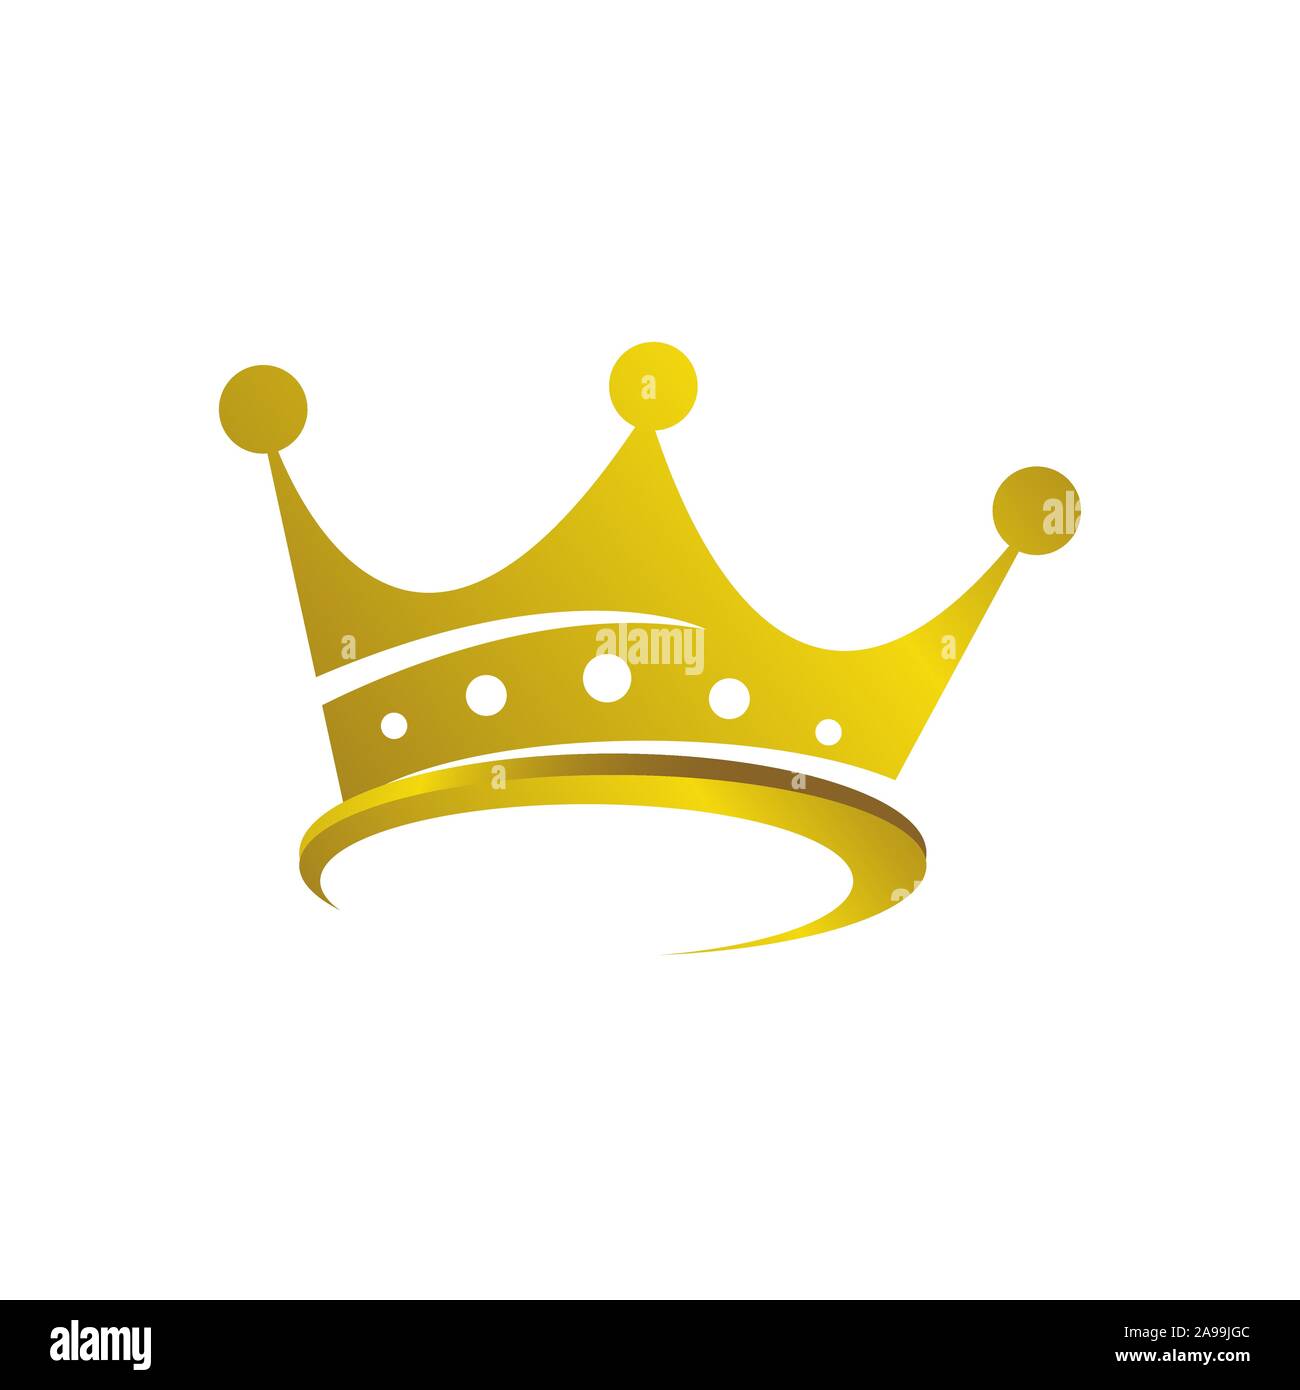 Gold Crown Logo Royal King Queen abstract design vector illustration Stock Vector